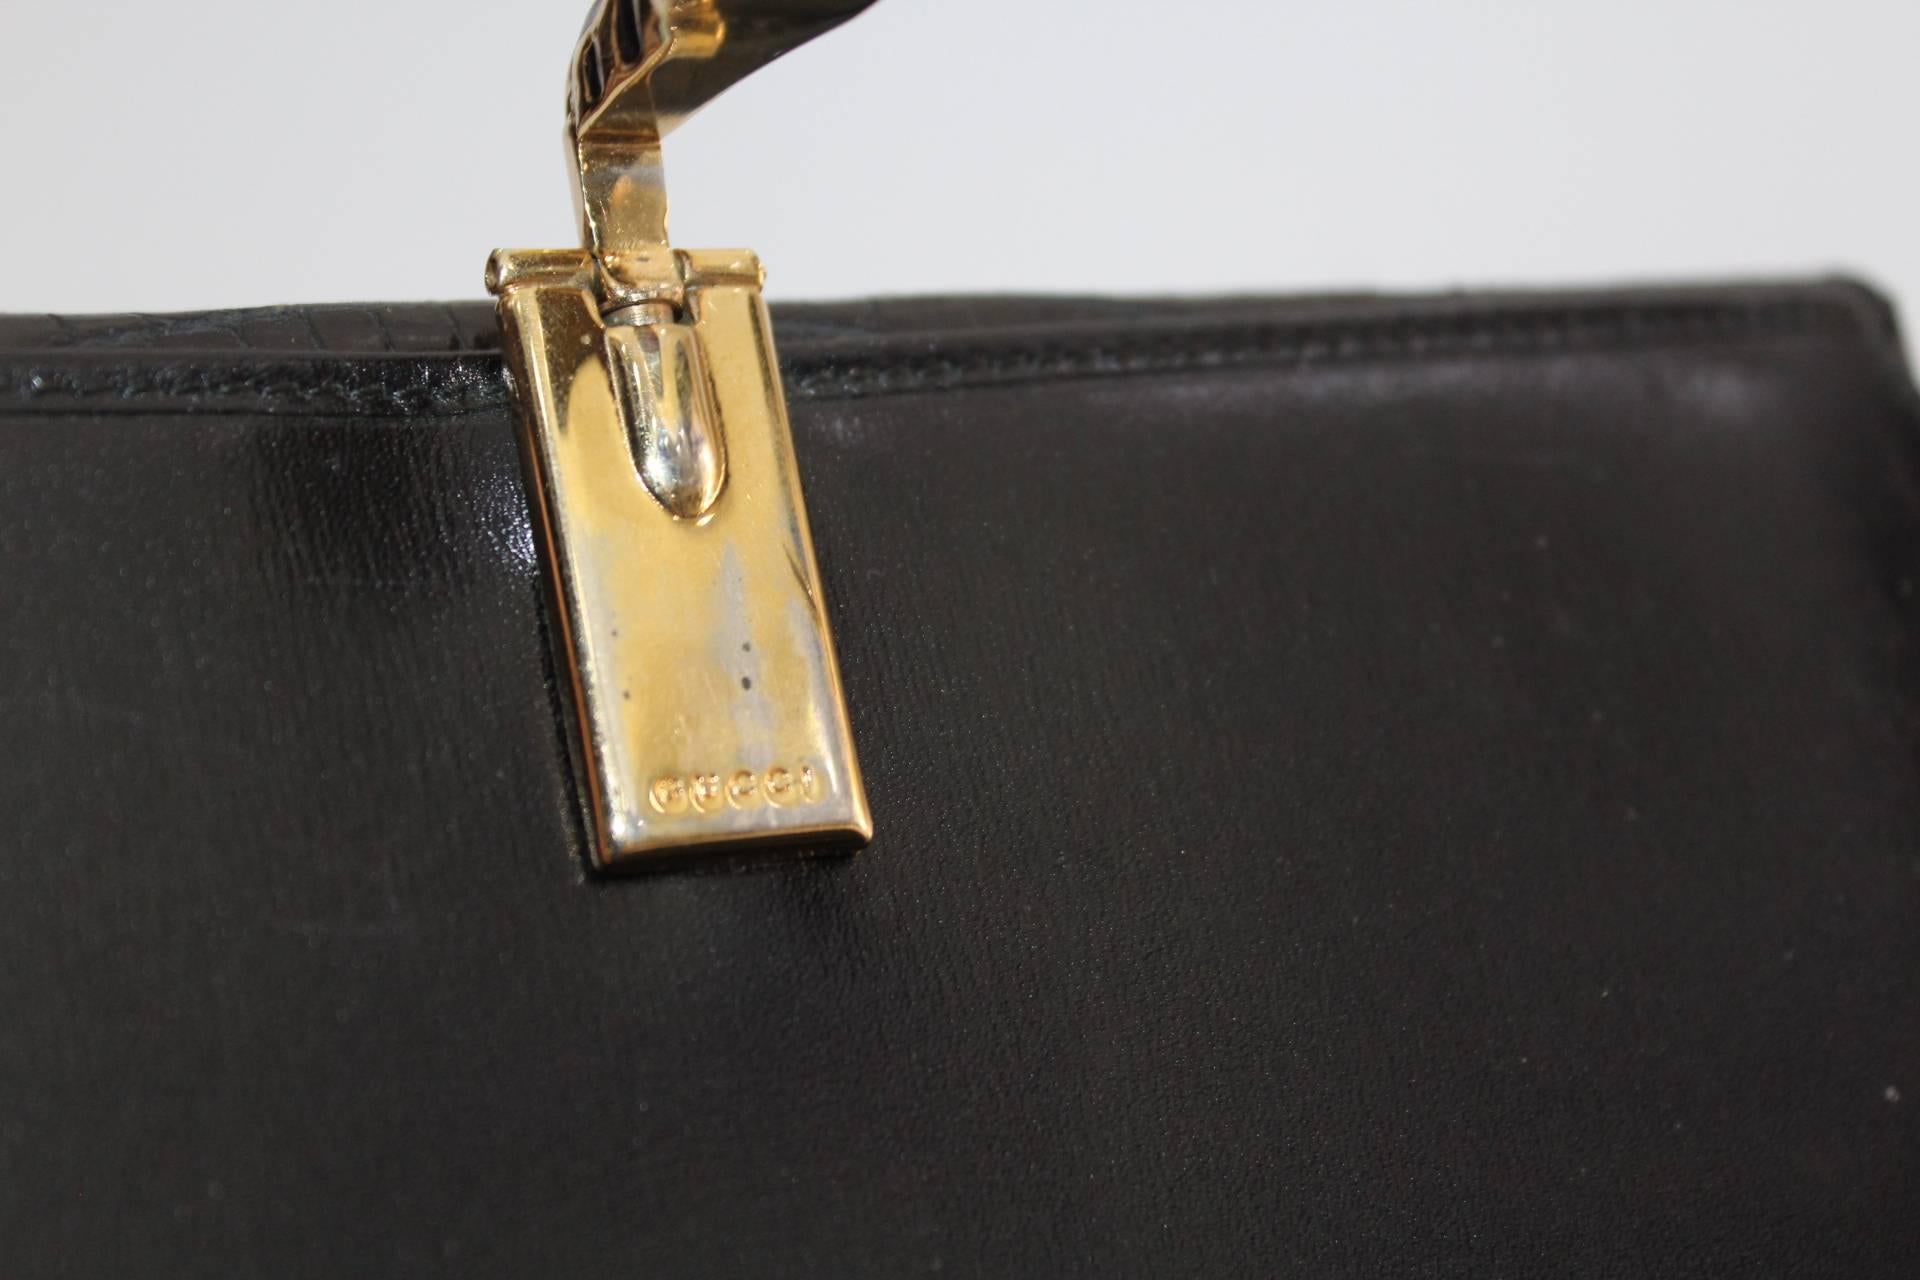 vintage gucci wallet black leather